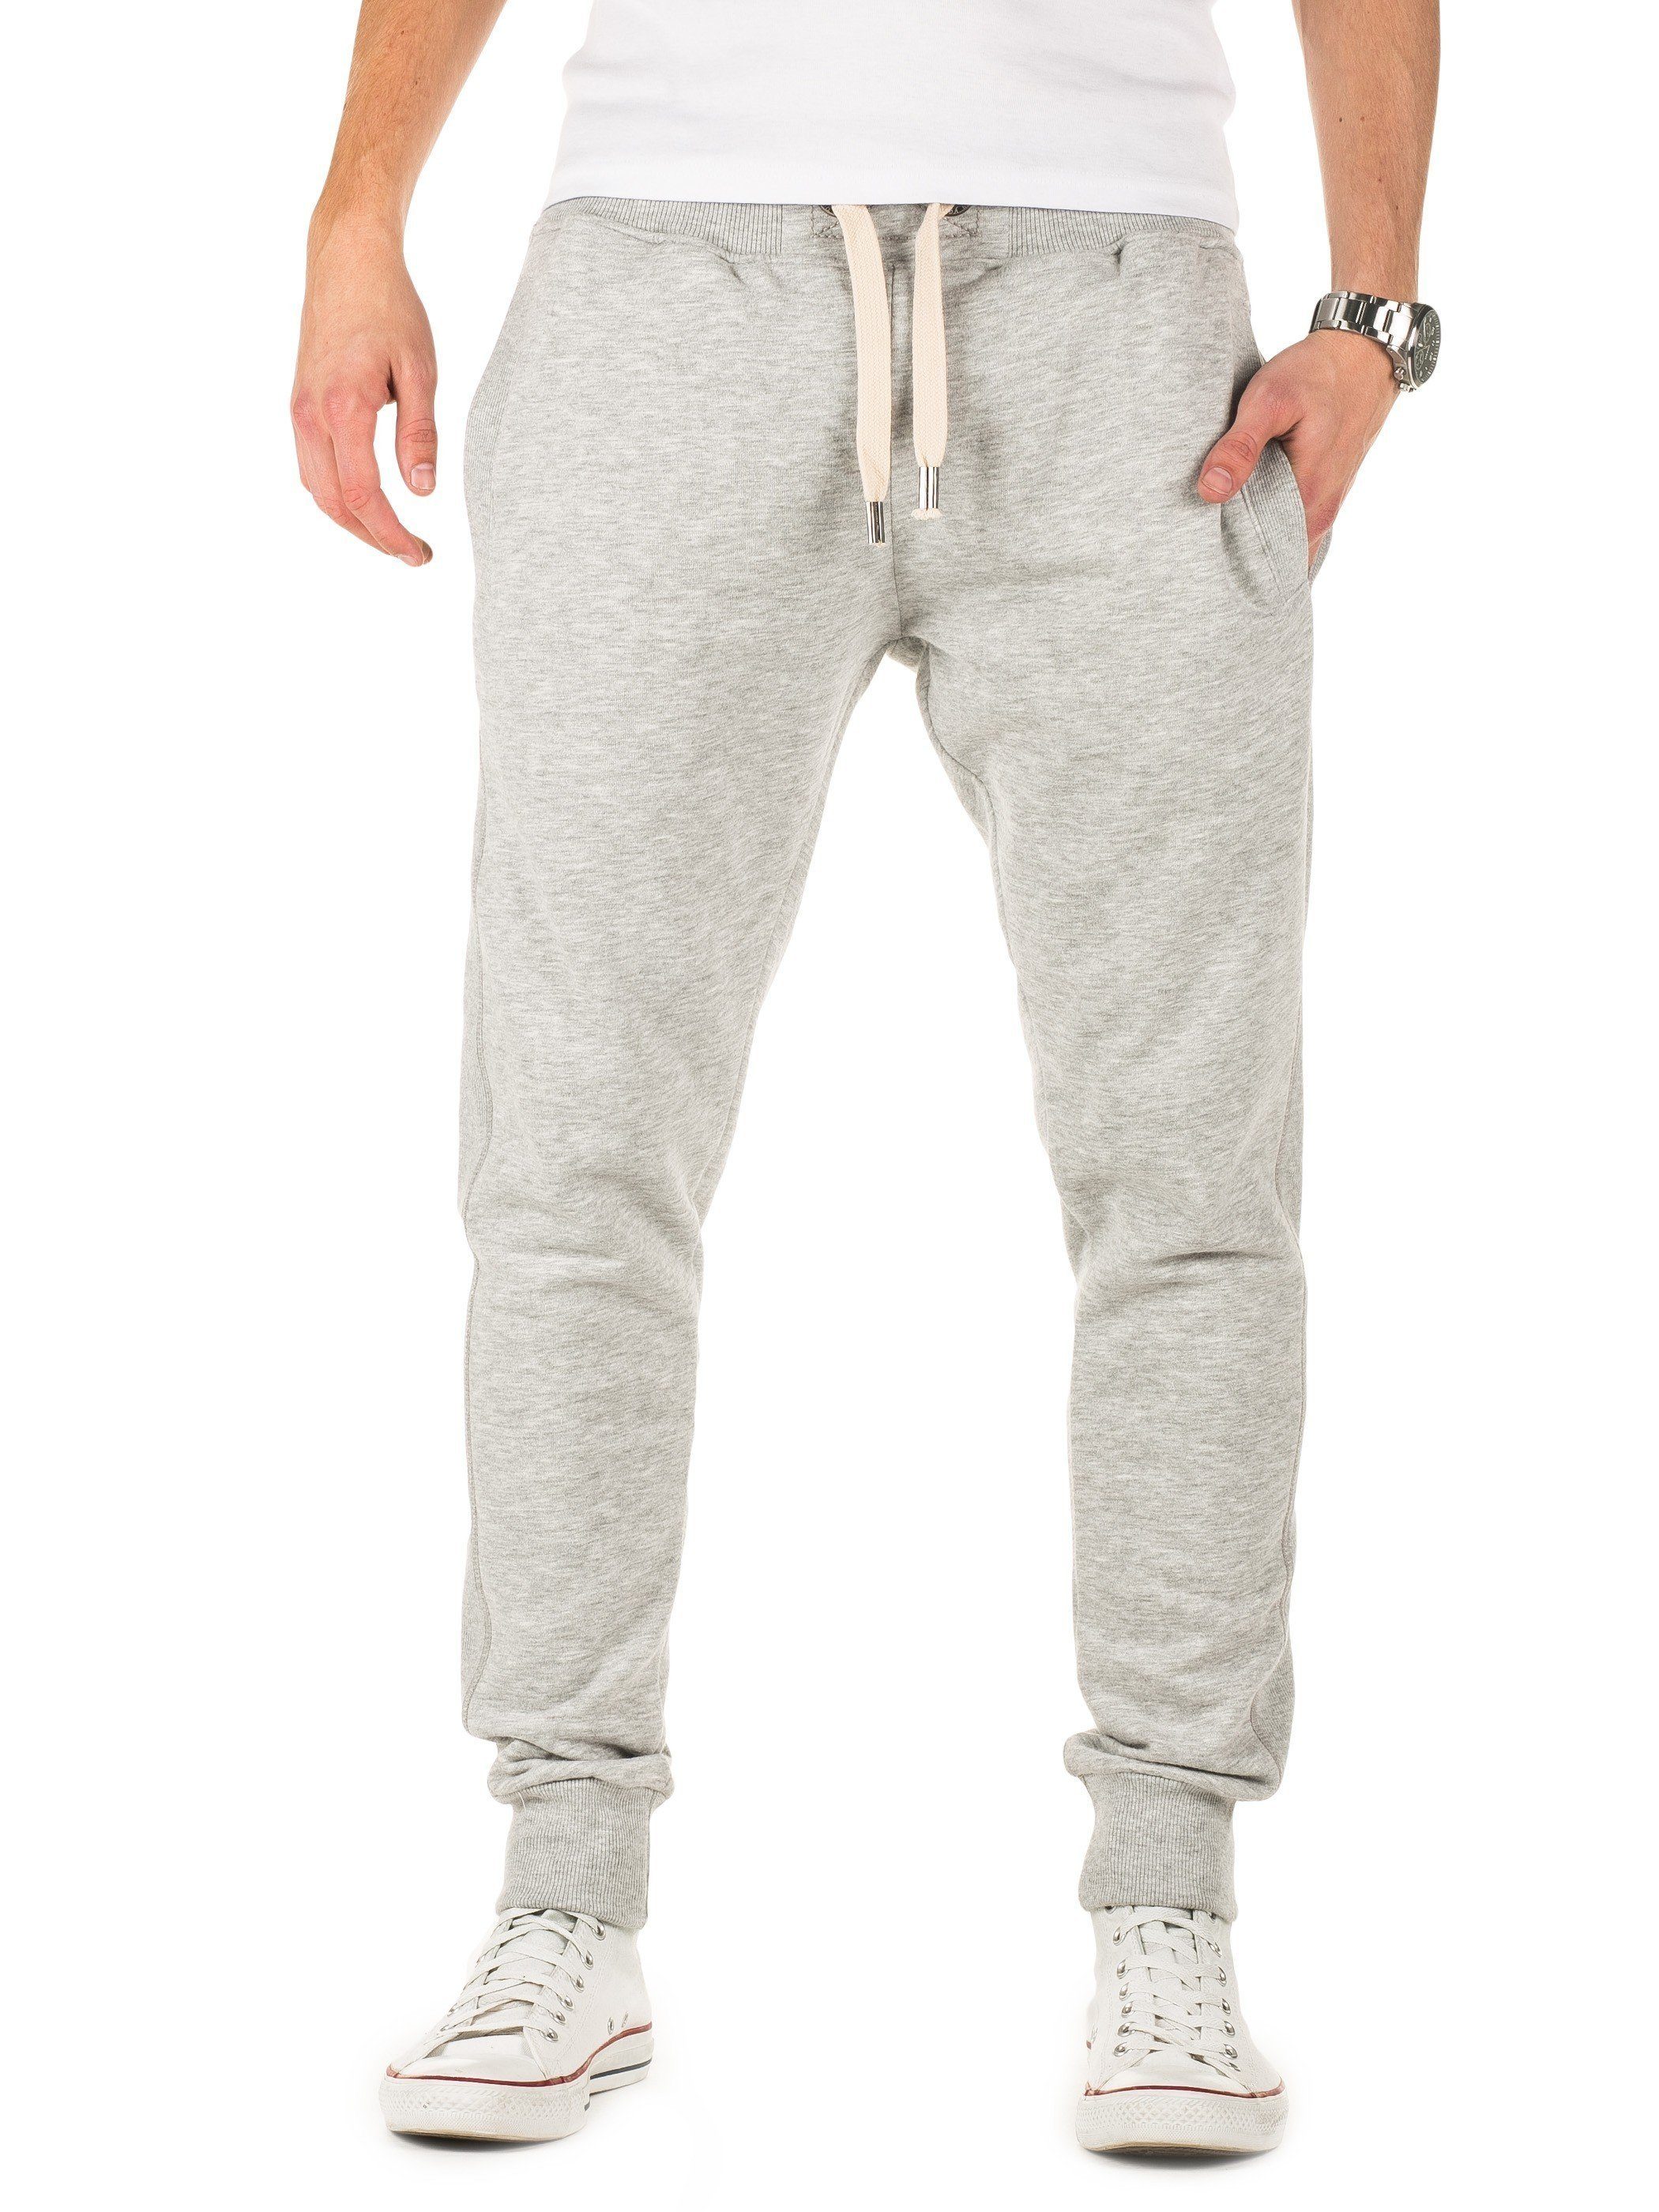 Yazubi Jogginghose Sweatpants Edward mit elastischem Bund mit Kordelzug in Unifarbe Grau (mirage gray 154703)